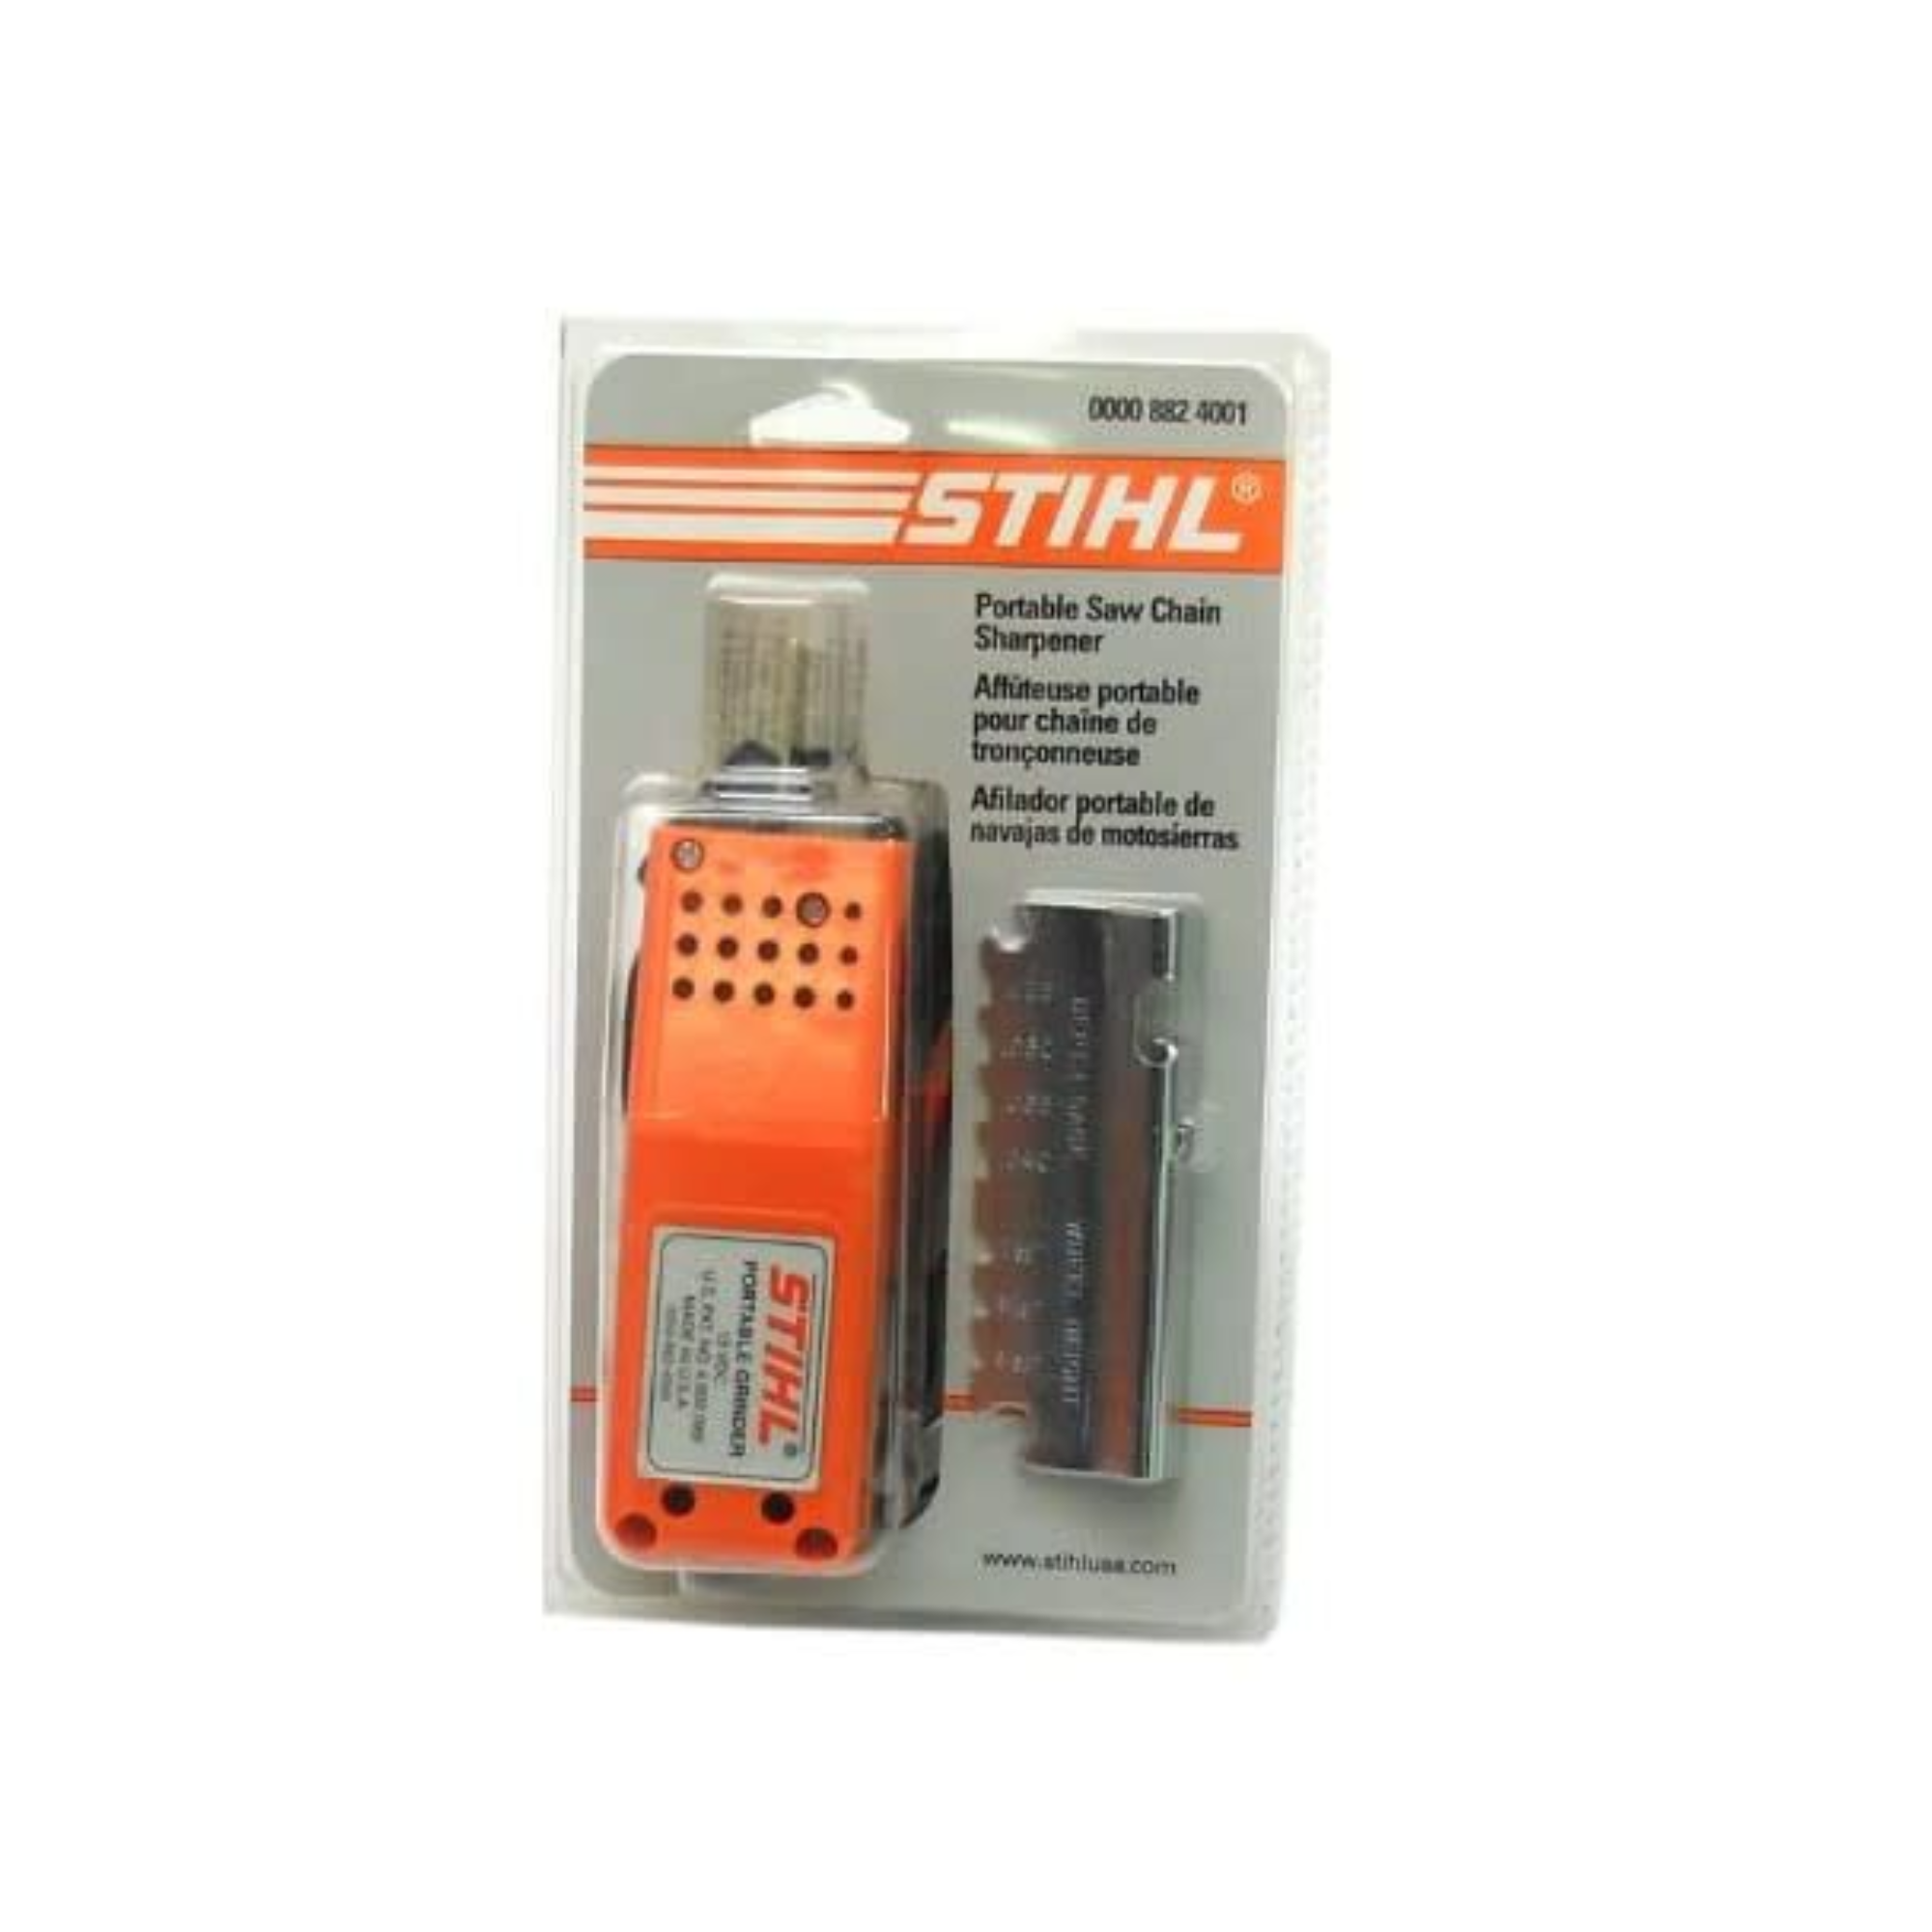 Stihl 12V Portable Saw Chain Sharpener/Grinder | 0000 882 4001